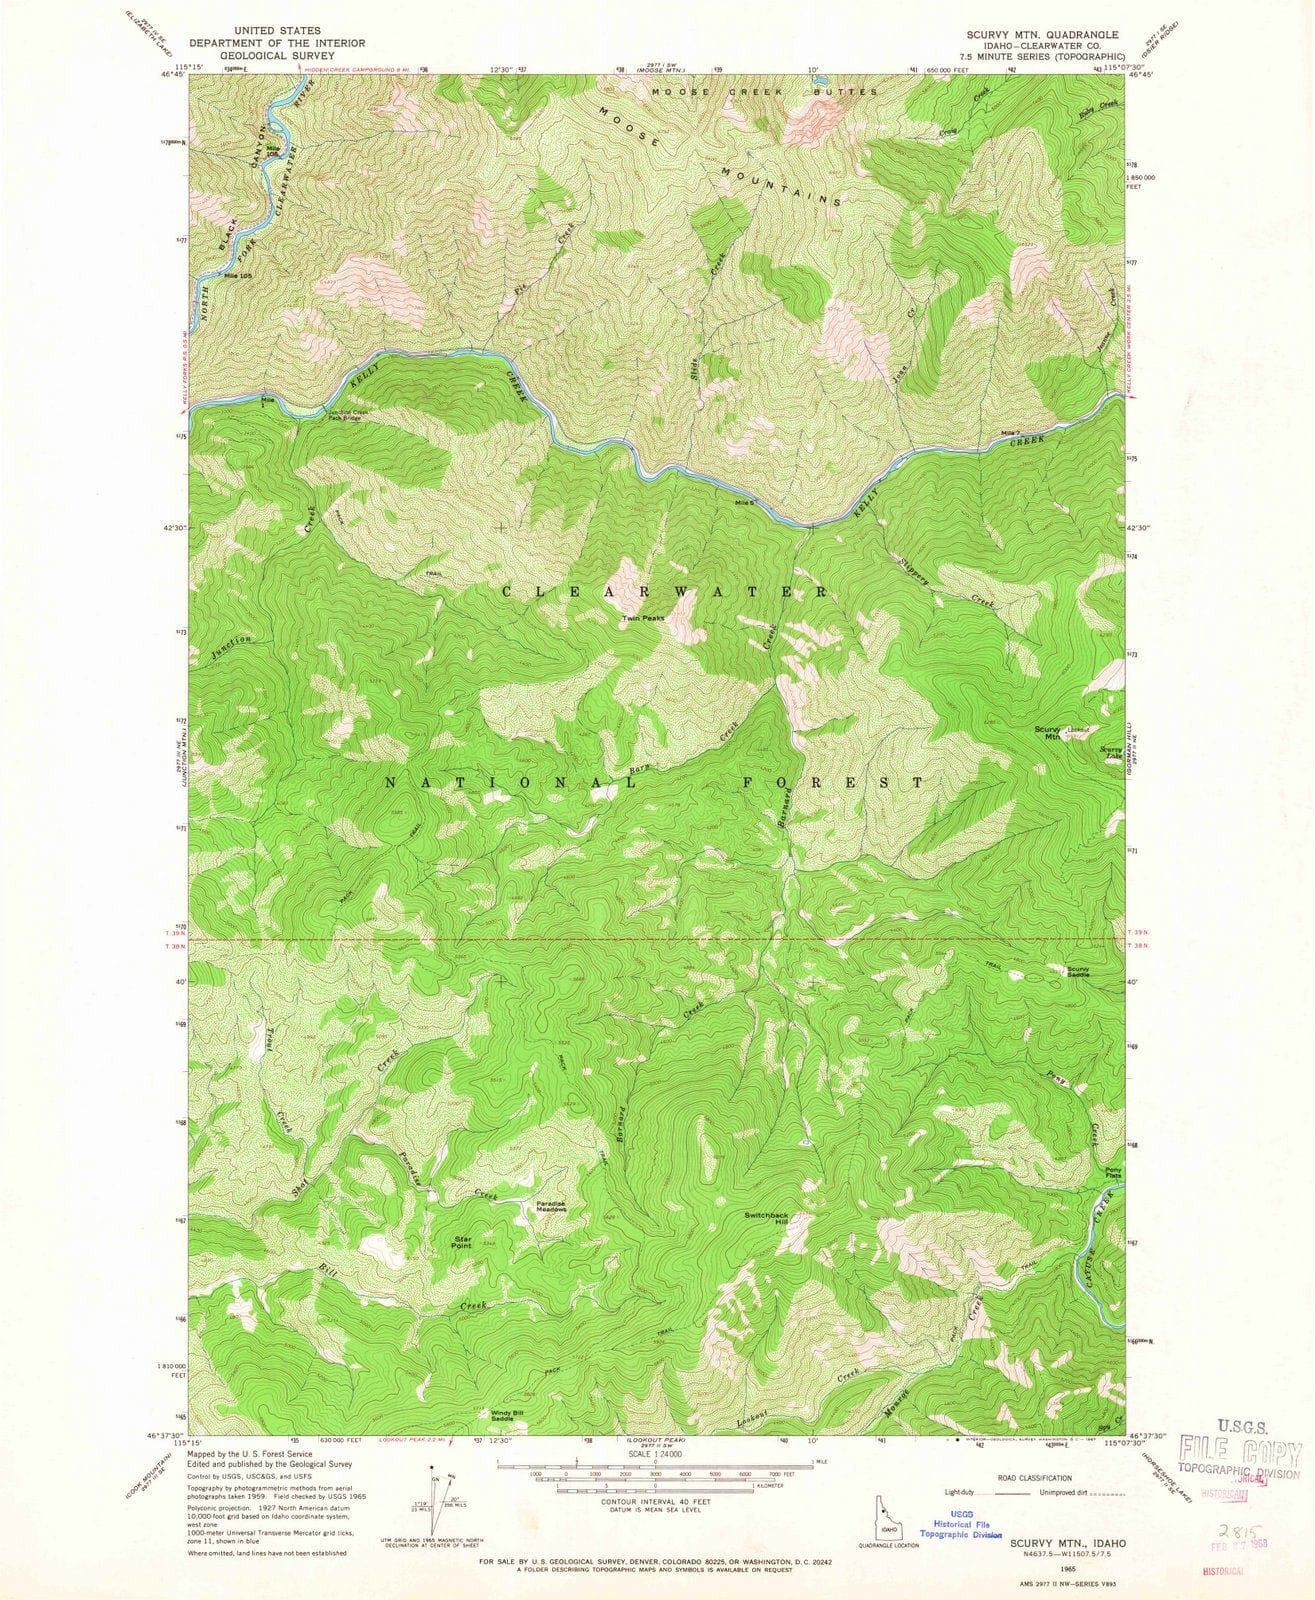 1965 Scurvy MTN, ID - Idaho - USGS Topographic Map